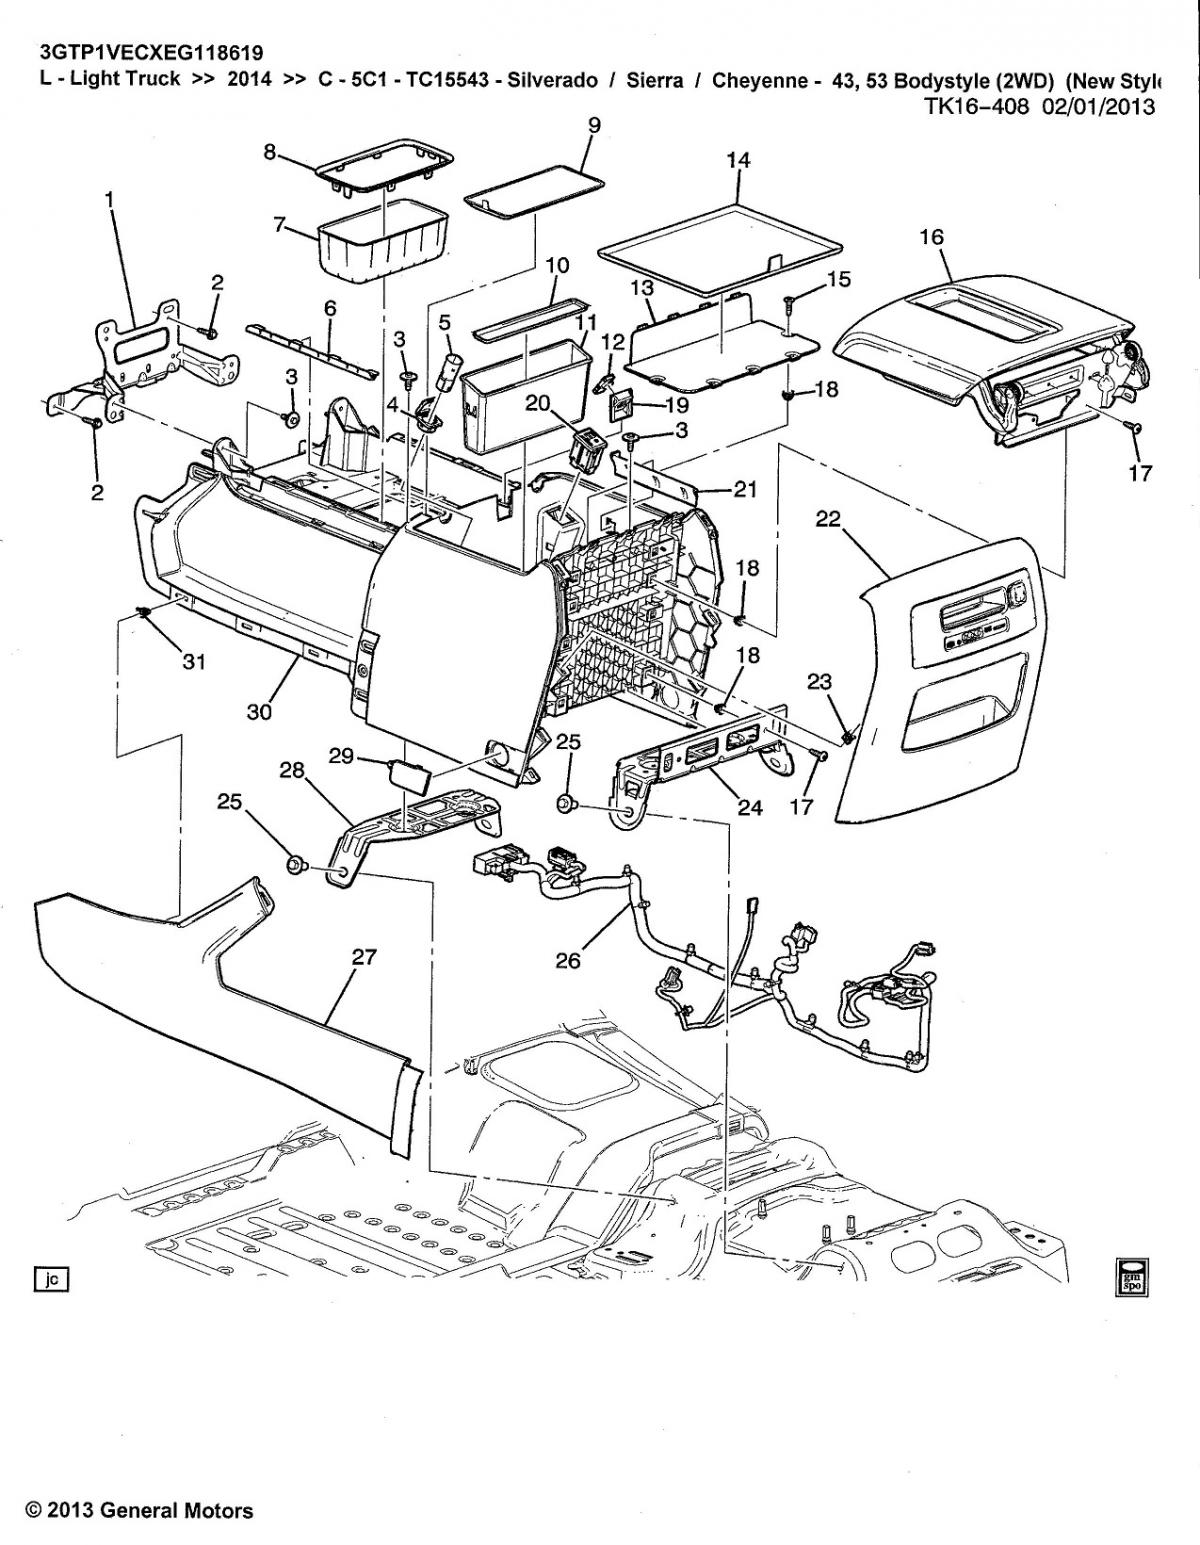 1999 Chevy Suburban Service Manual Pdf | 2018 Cars Models